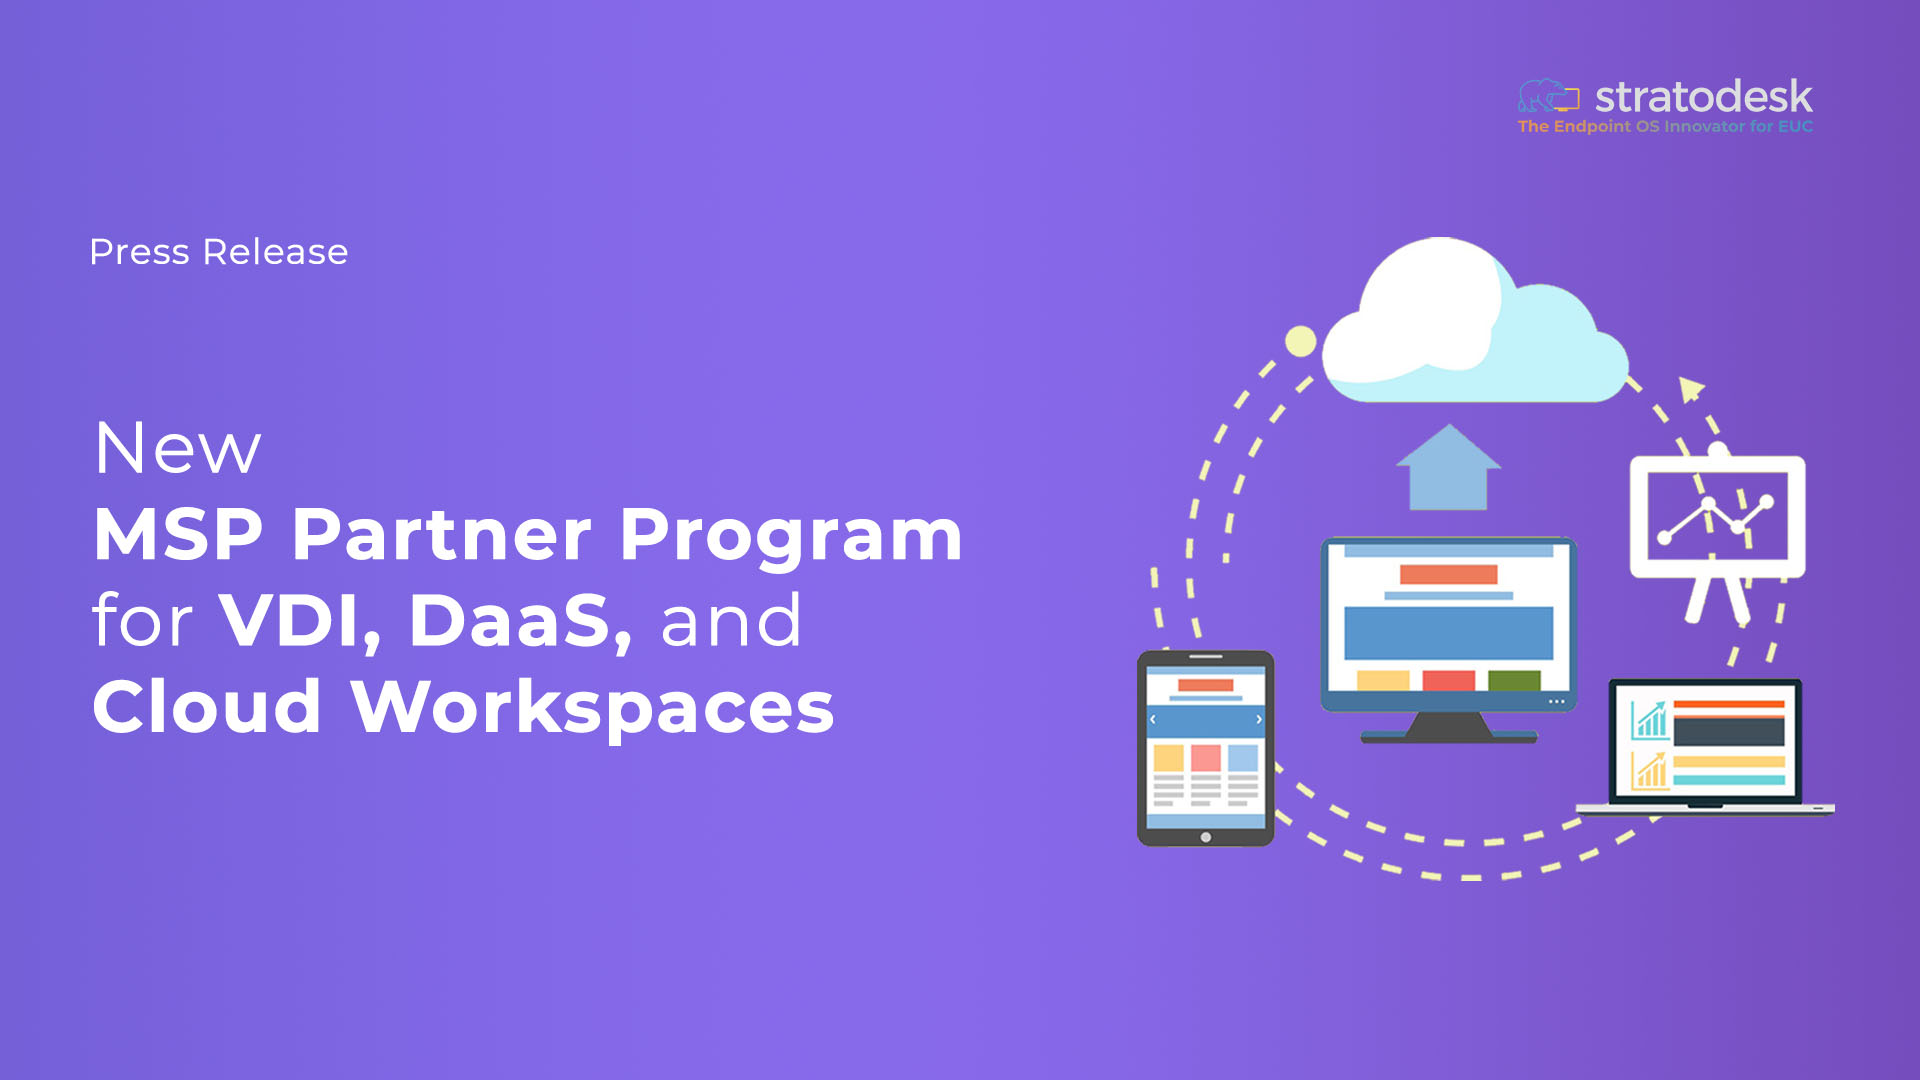 New MSP Partner Program for VDI, DaaS, and Cloud Workspaces